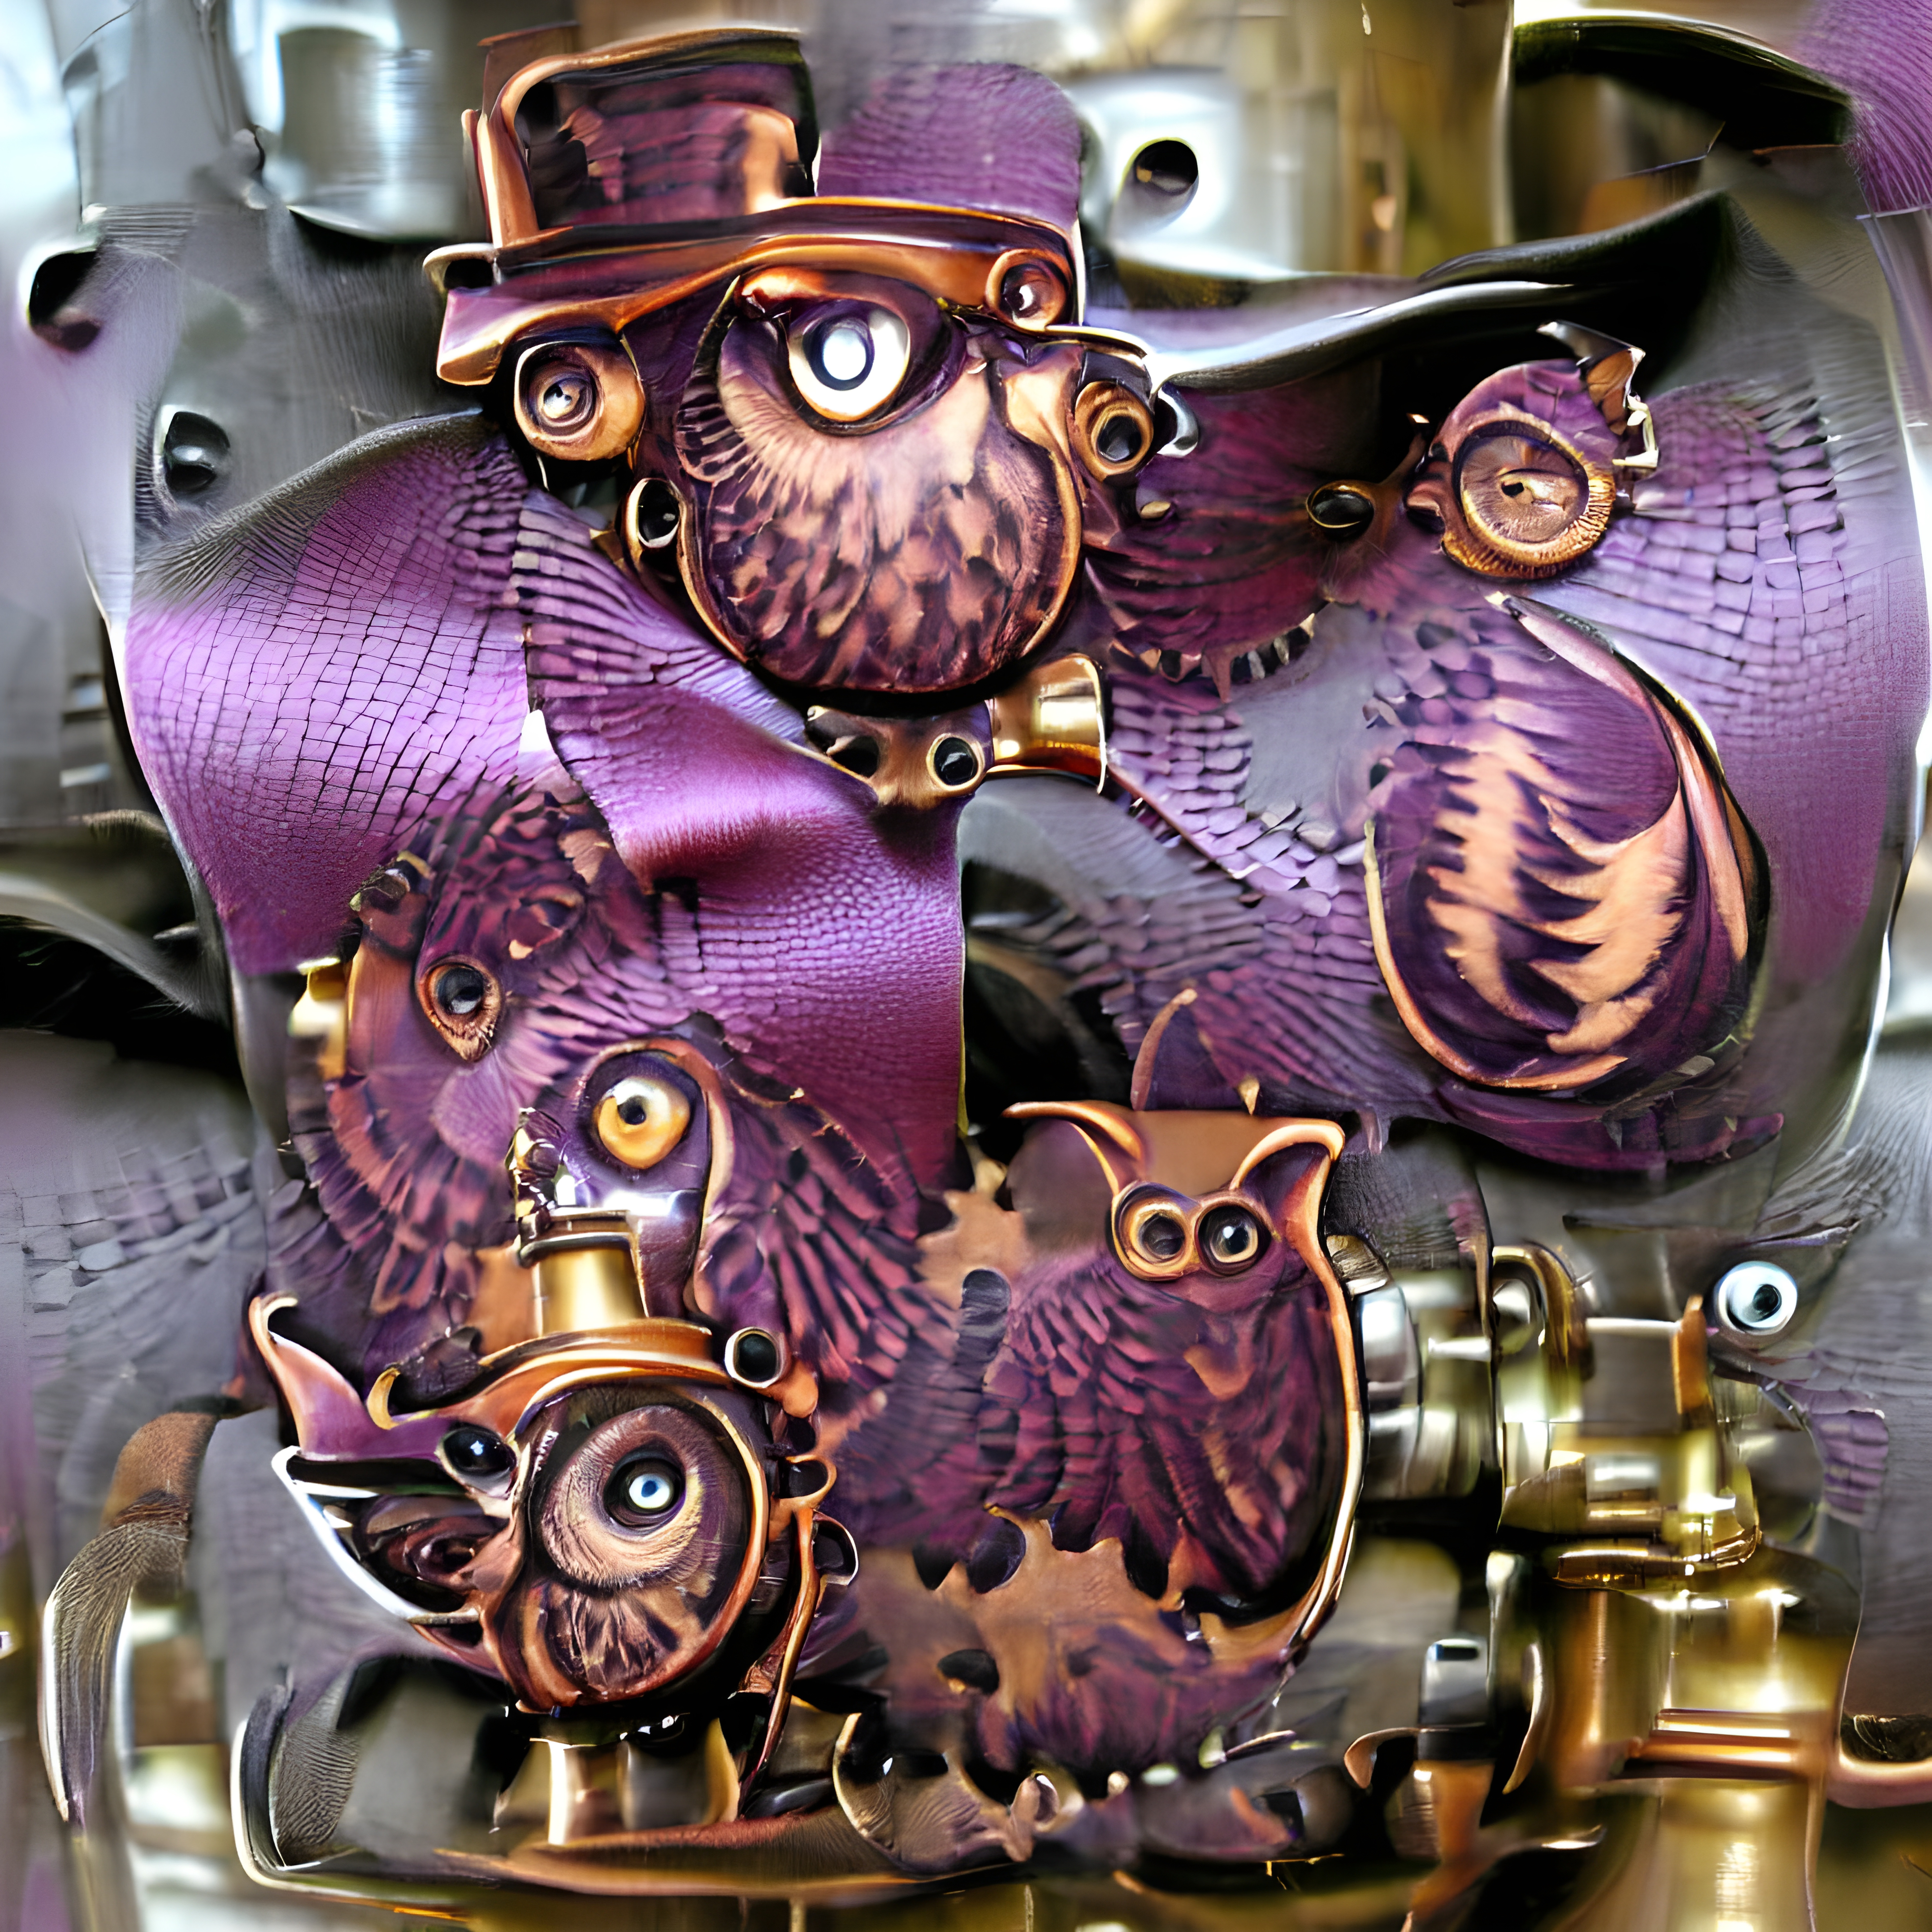 The Baffled Owls